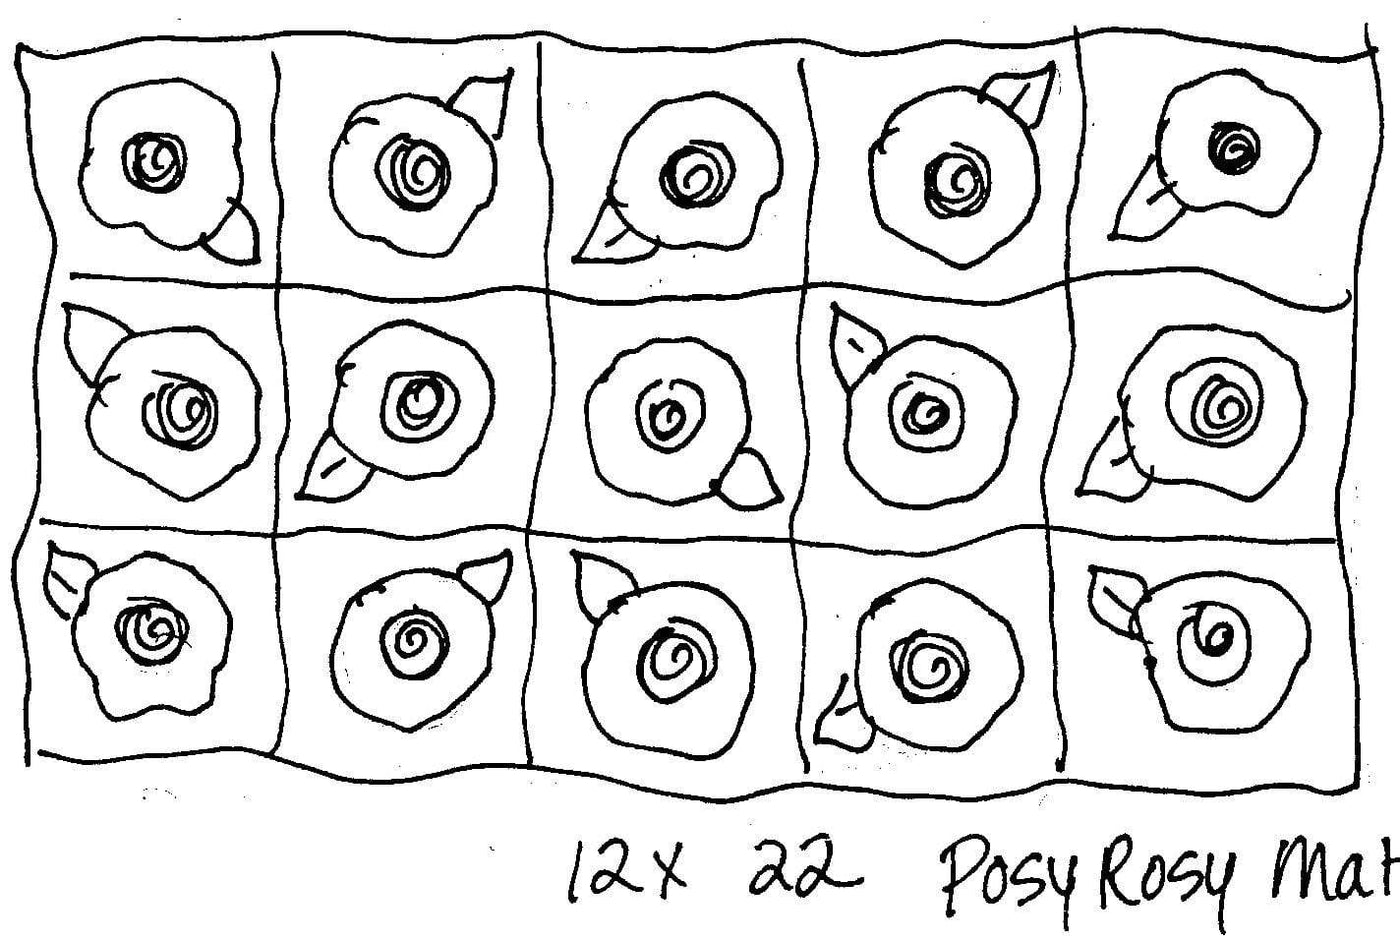 Posy Rosy Mat - Rug Hooking Pattern 12 x 22